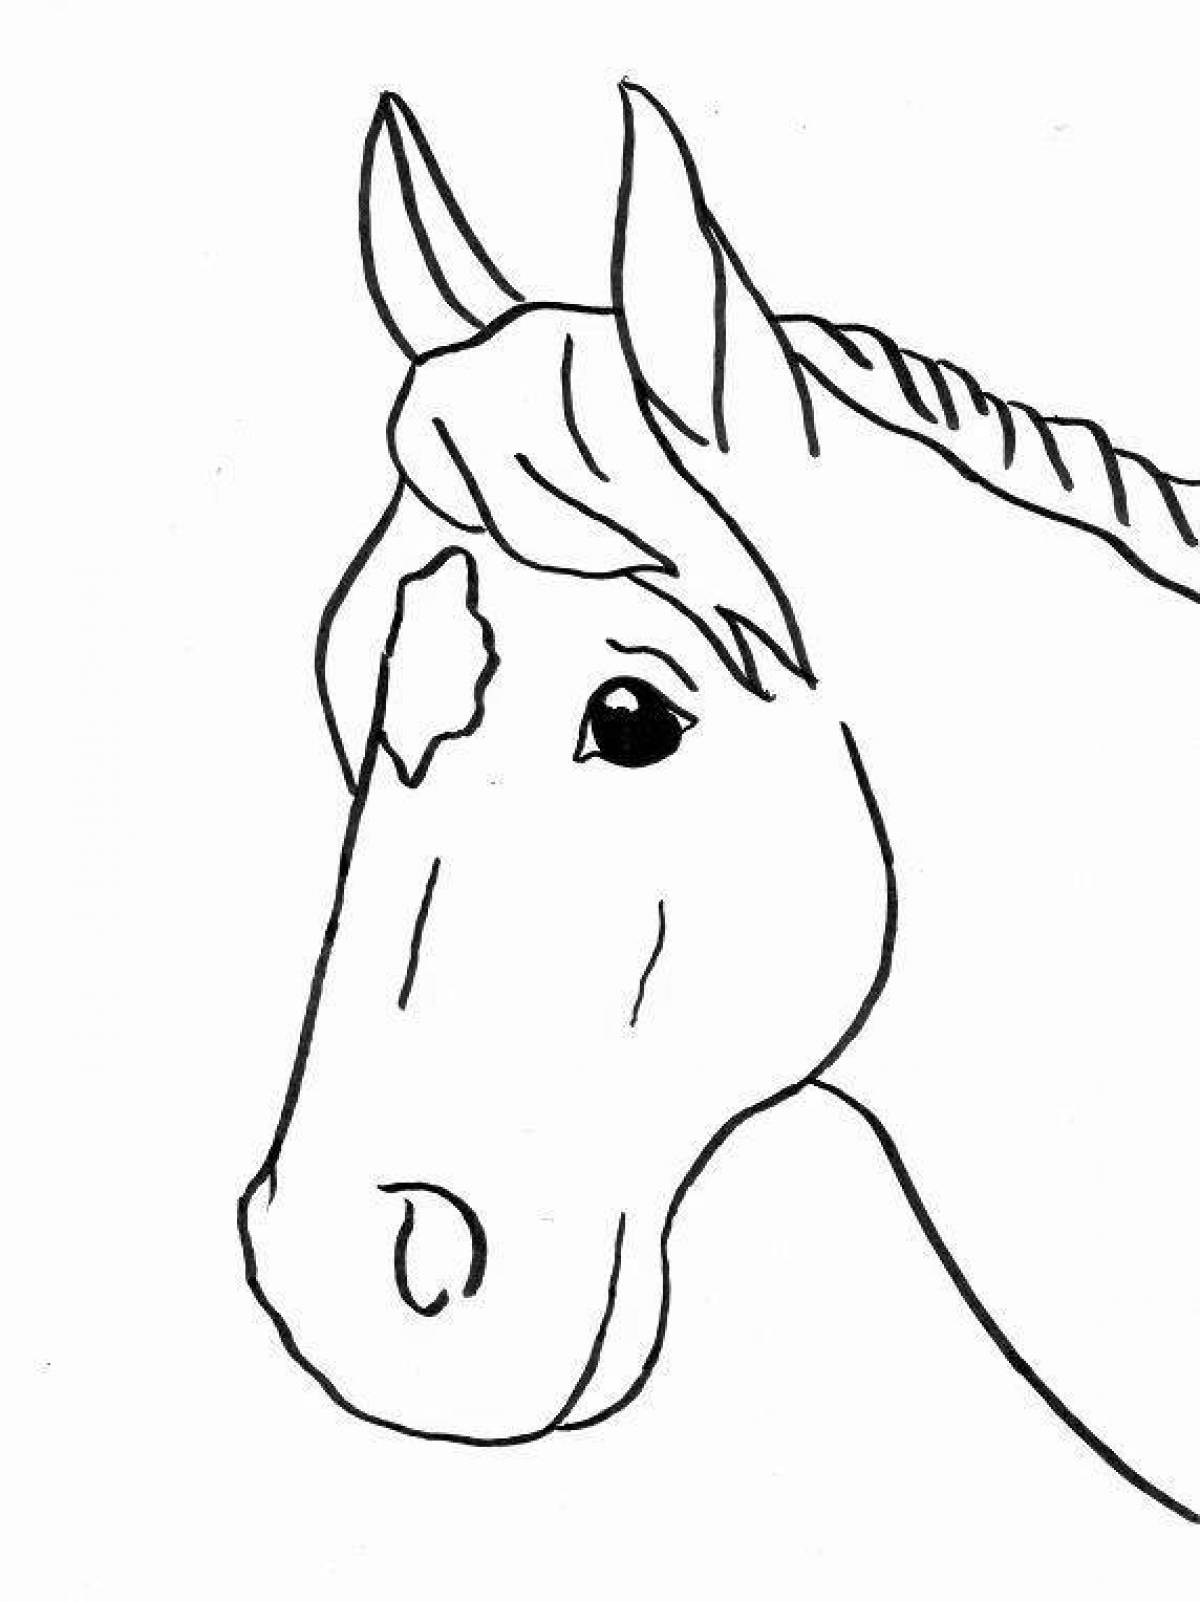 Exquisite horse head coloring book